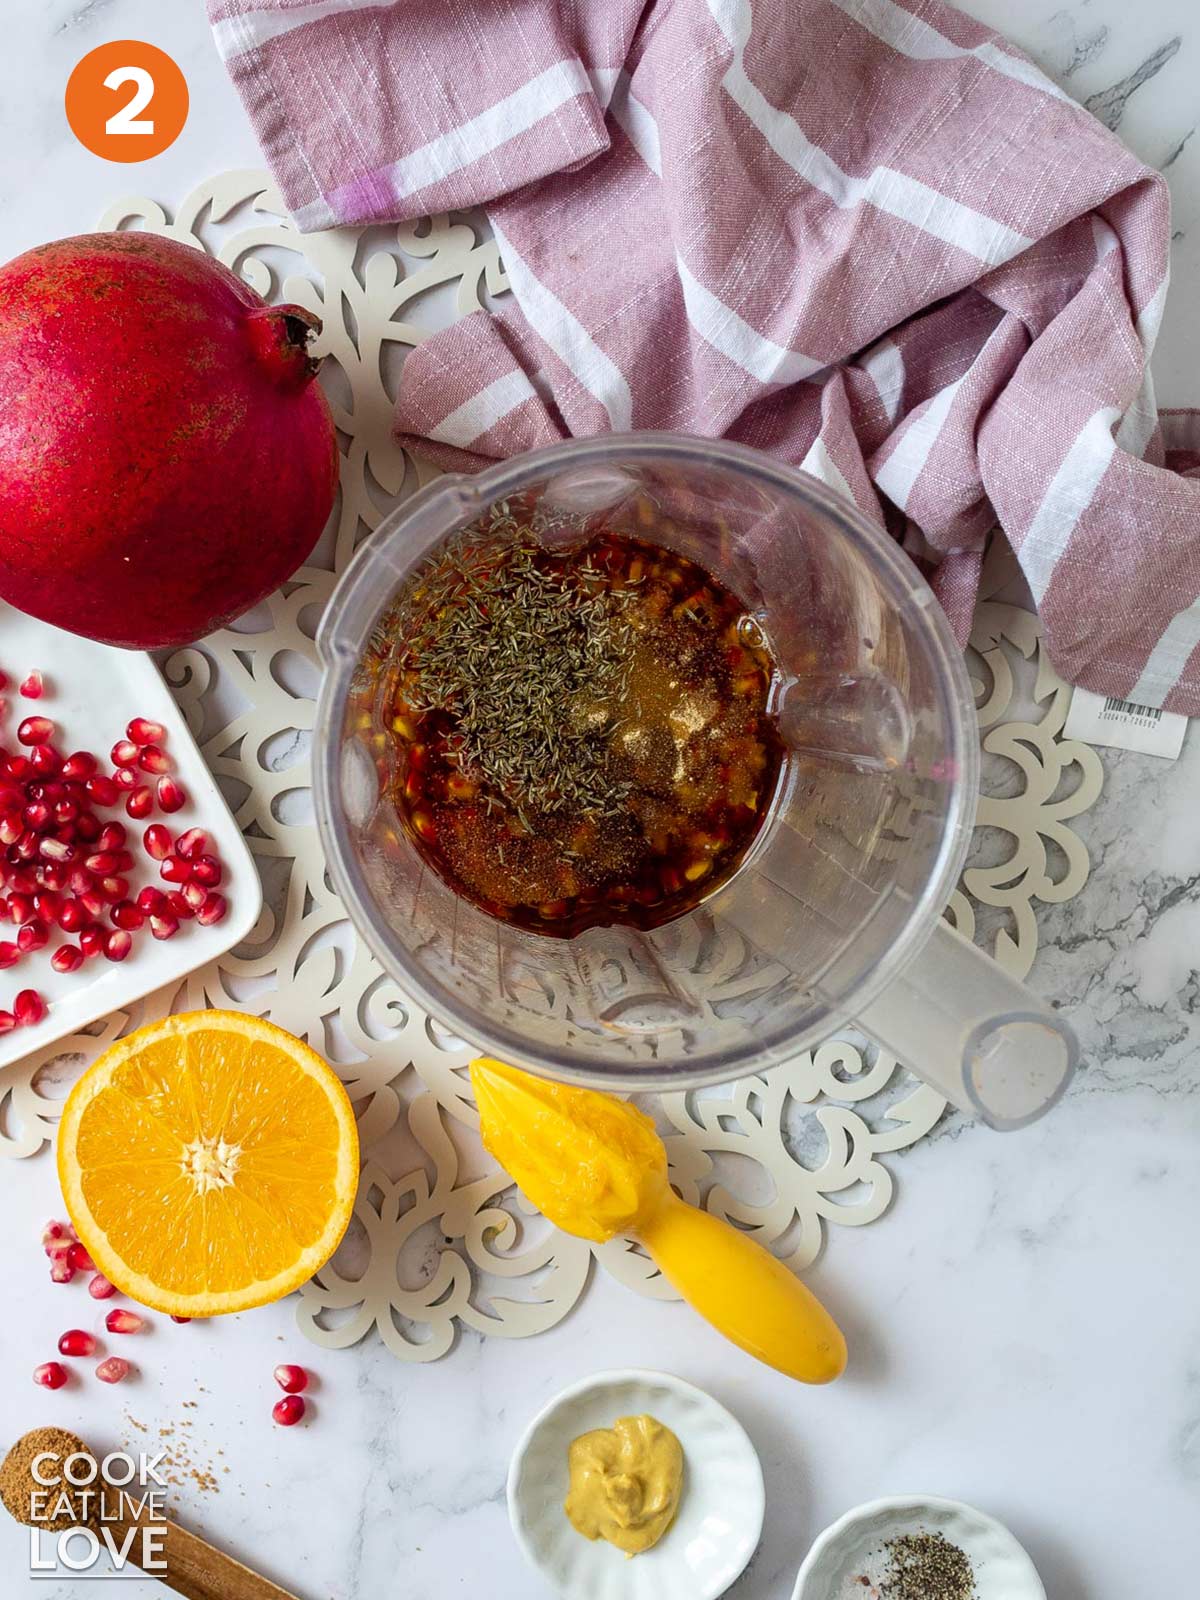 The ingredients in a blender to make pomegranate vinaigrette.